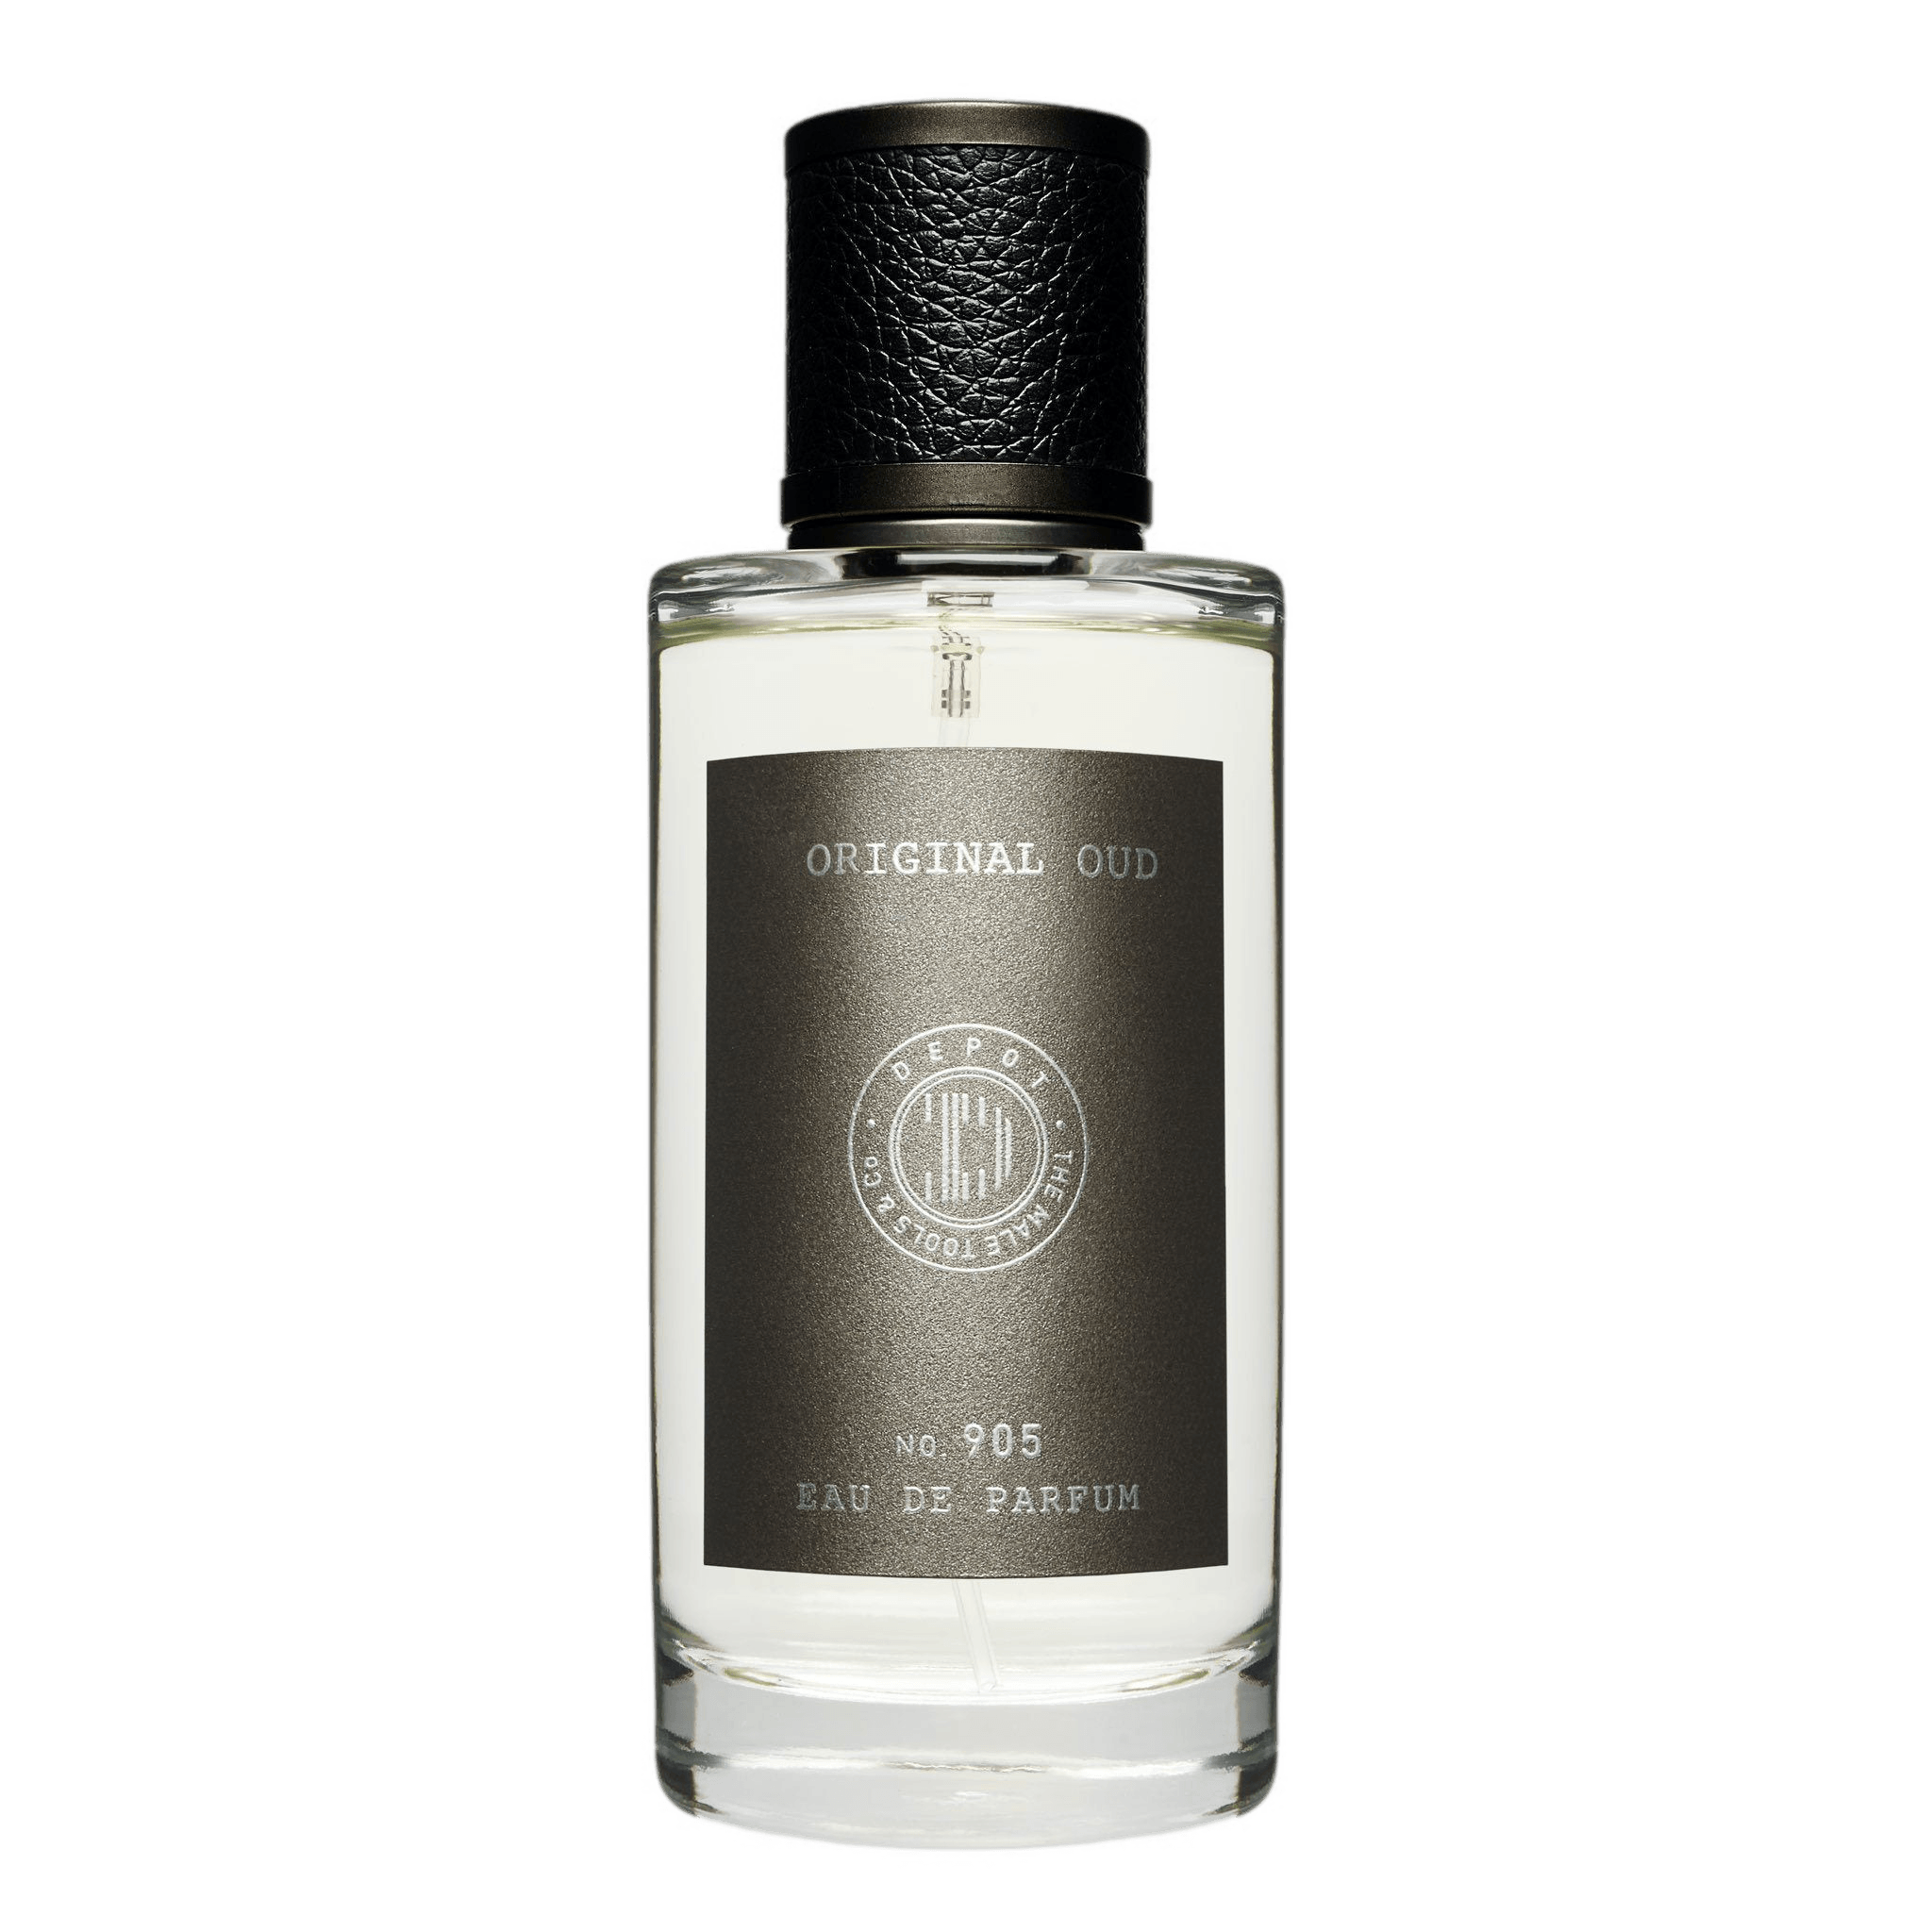 Depot No. 905 Eau de Parfum - Original Oud 100 ml